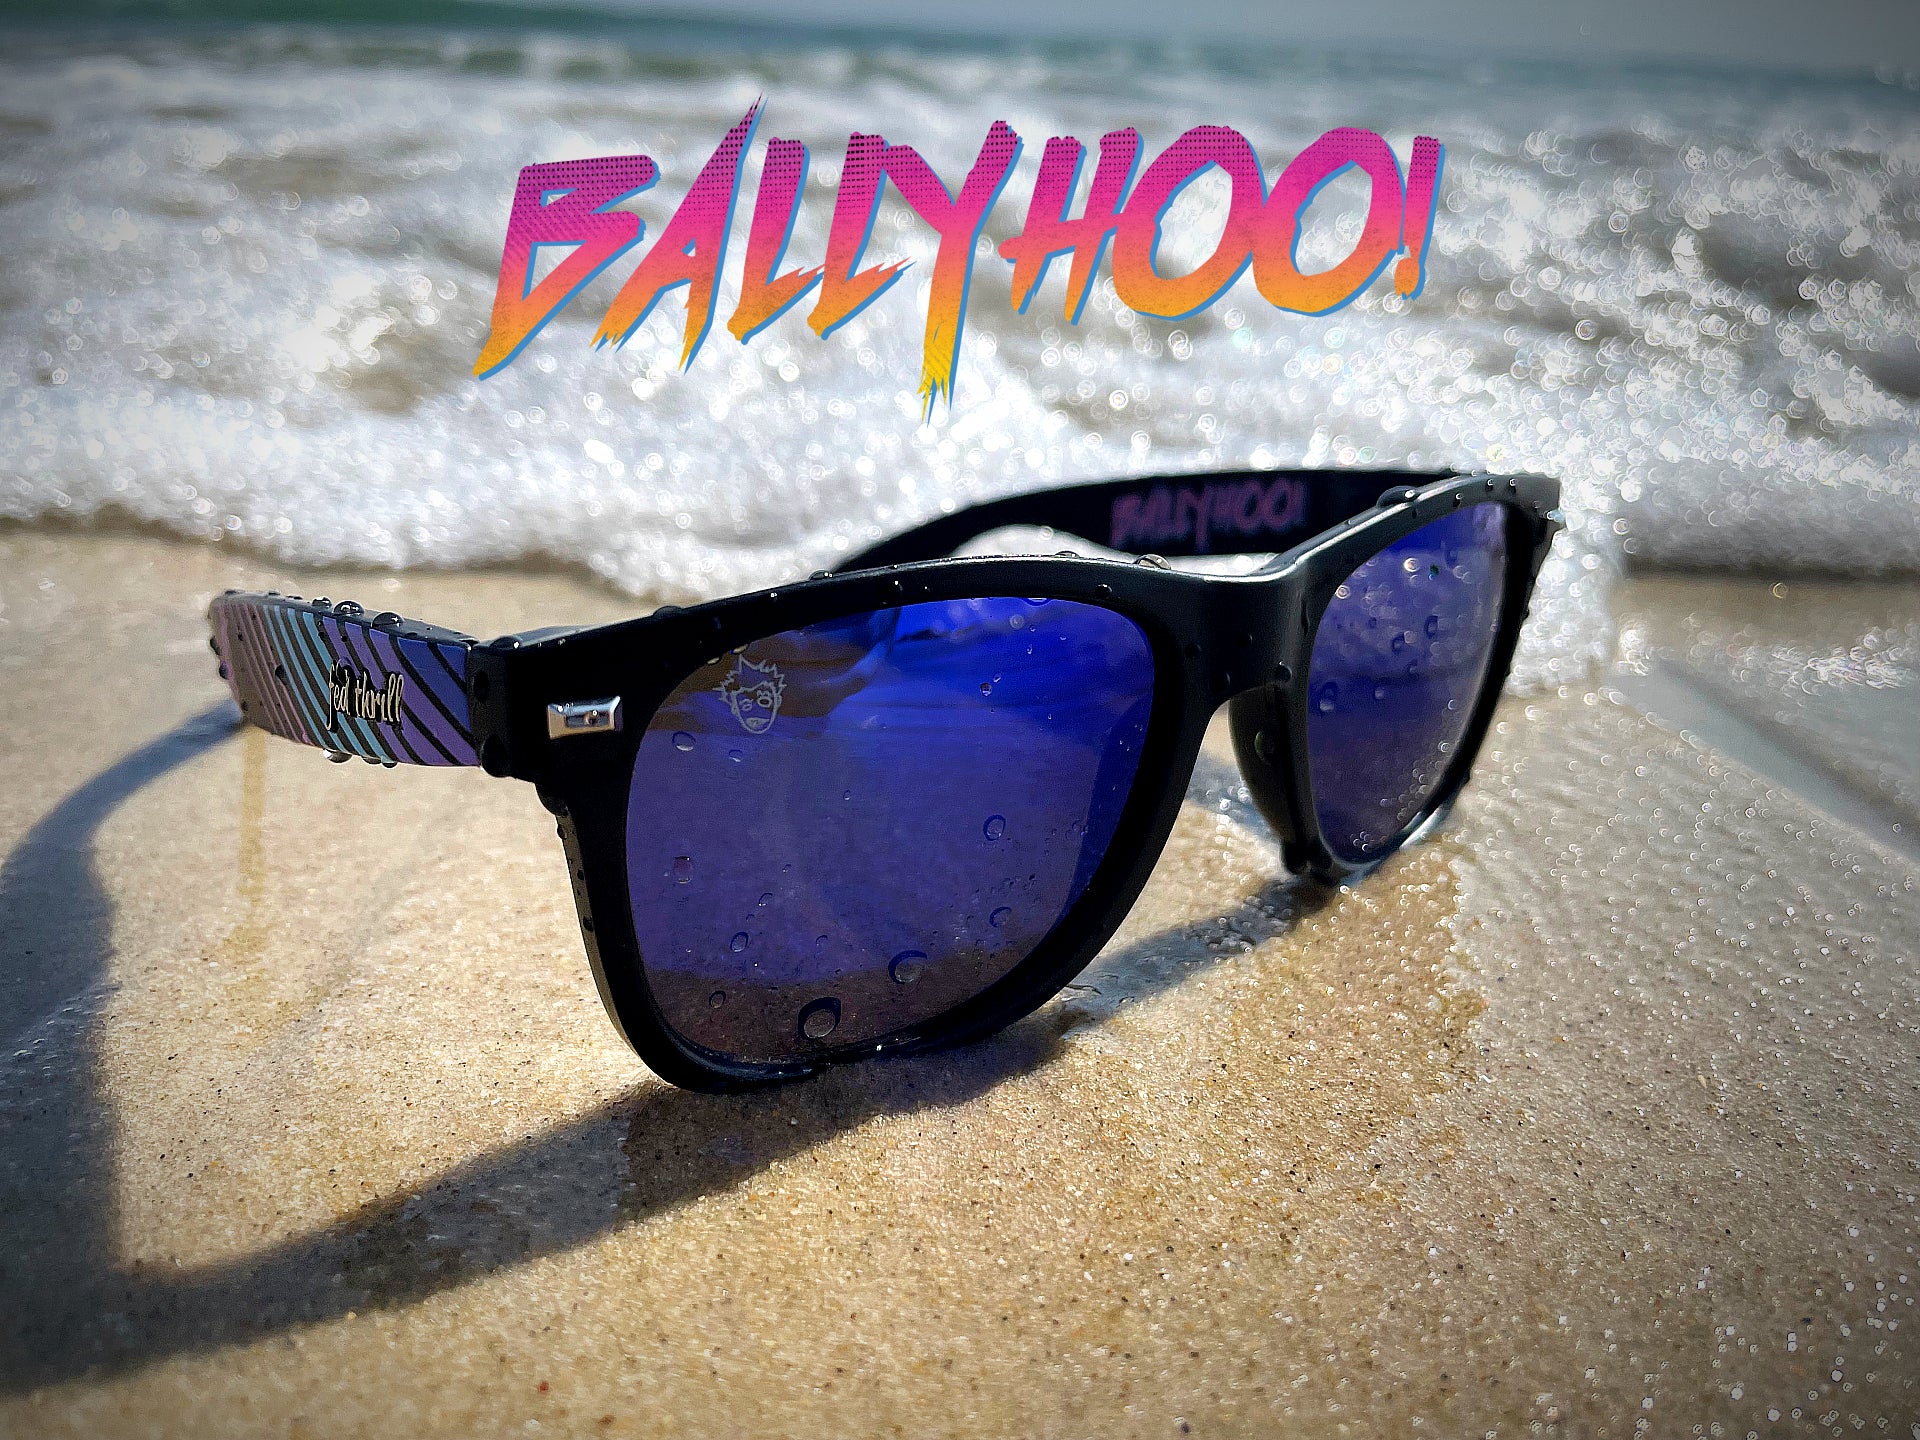 Fultons -  Ballyhoo! 3.0 Limited Editions